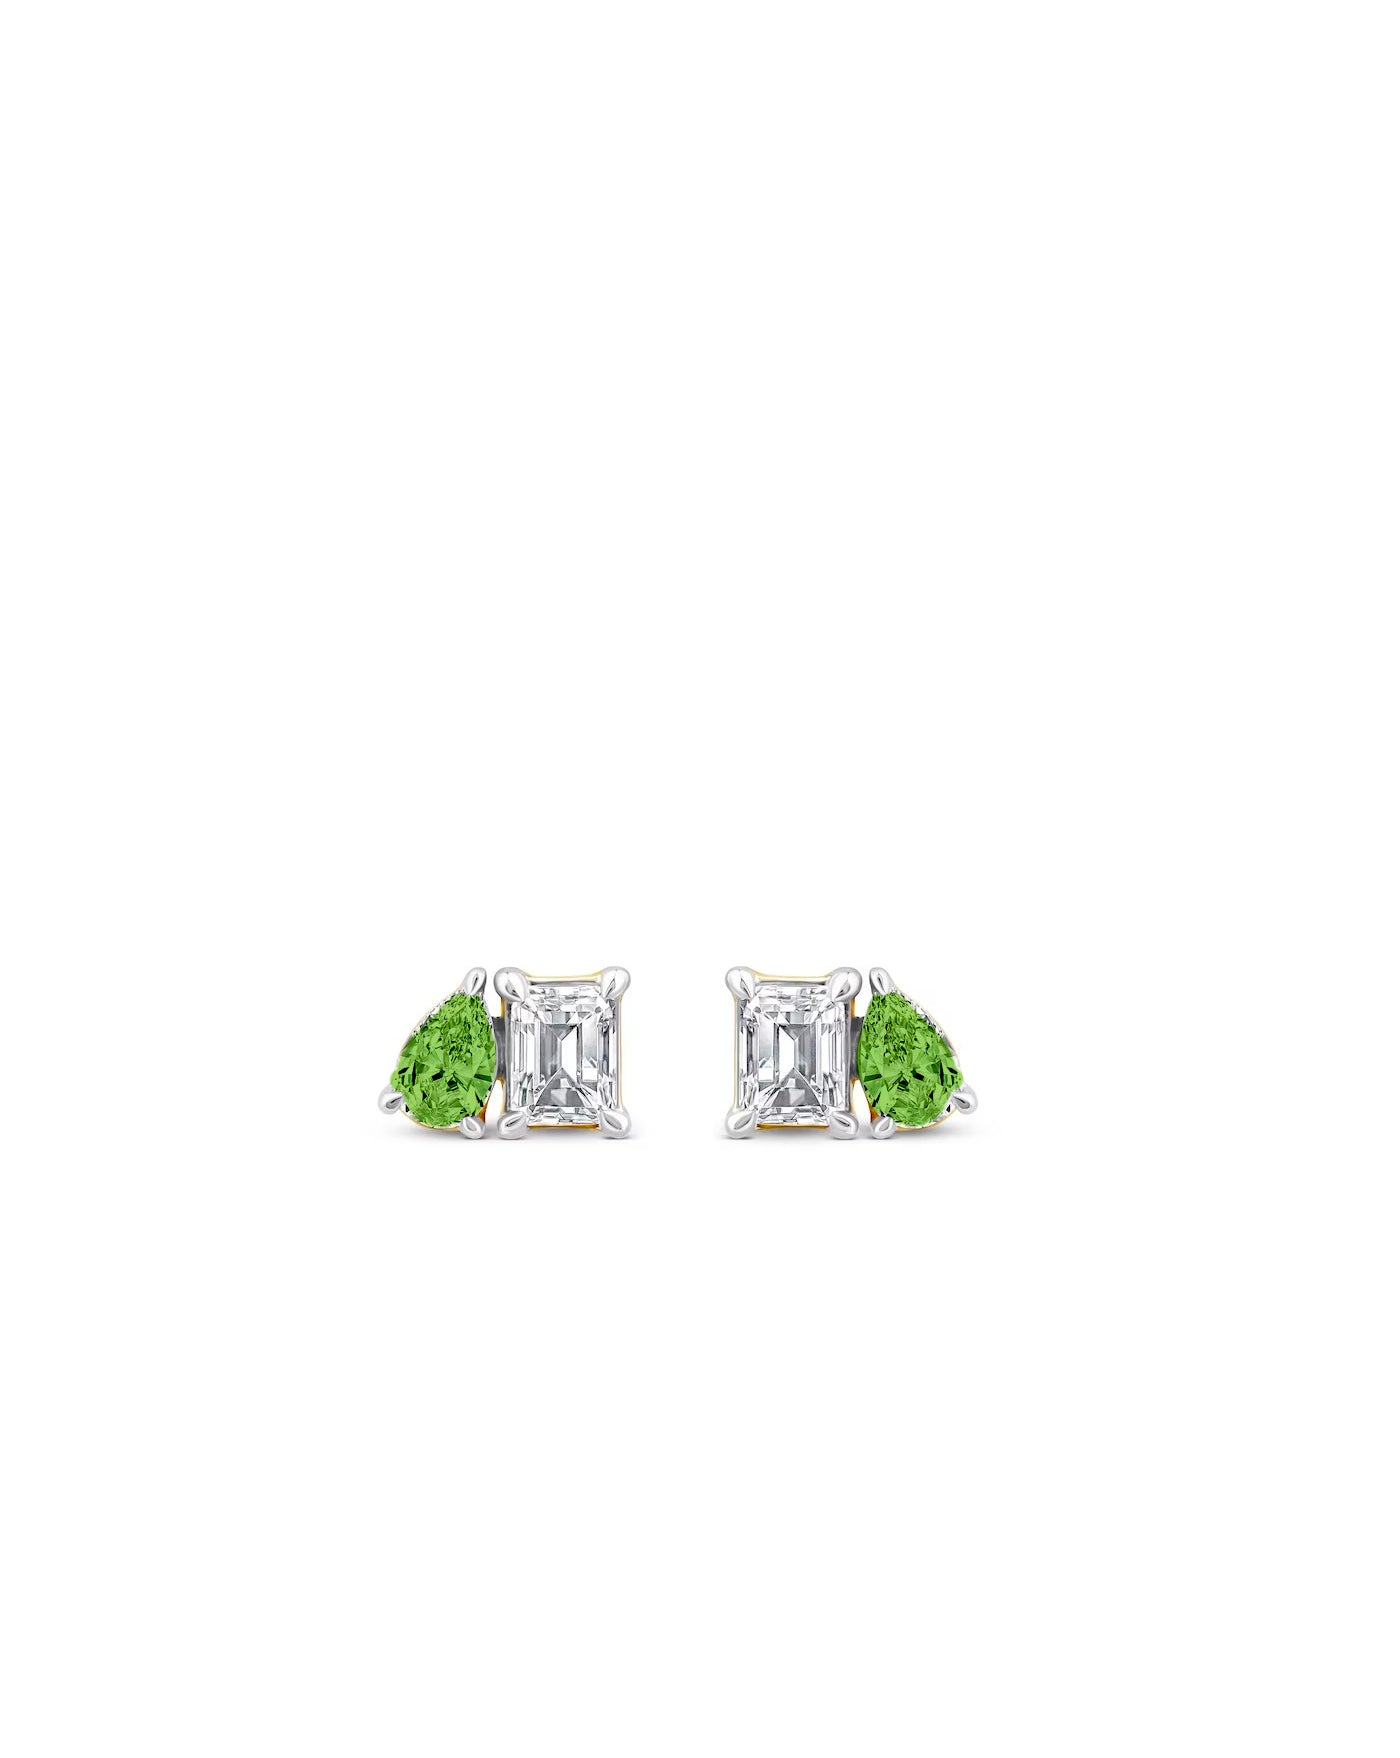 Toi et Moi Diamond Earring and Peridot Studs | 1 carat